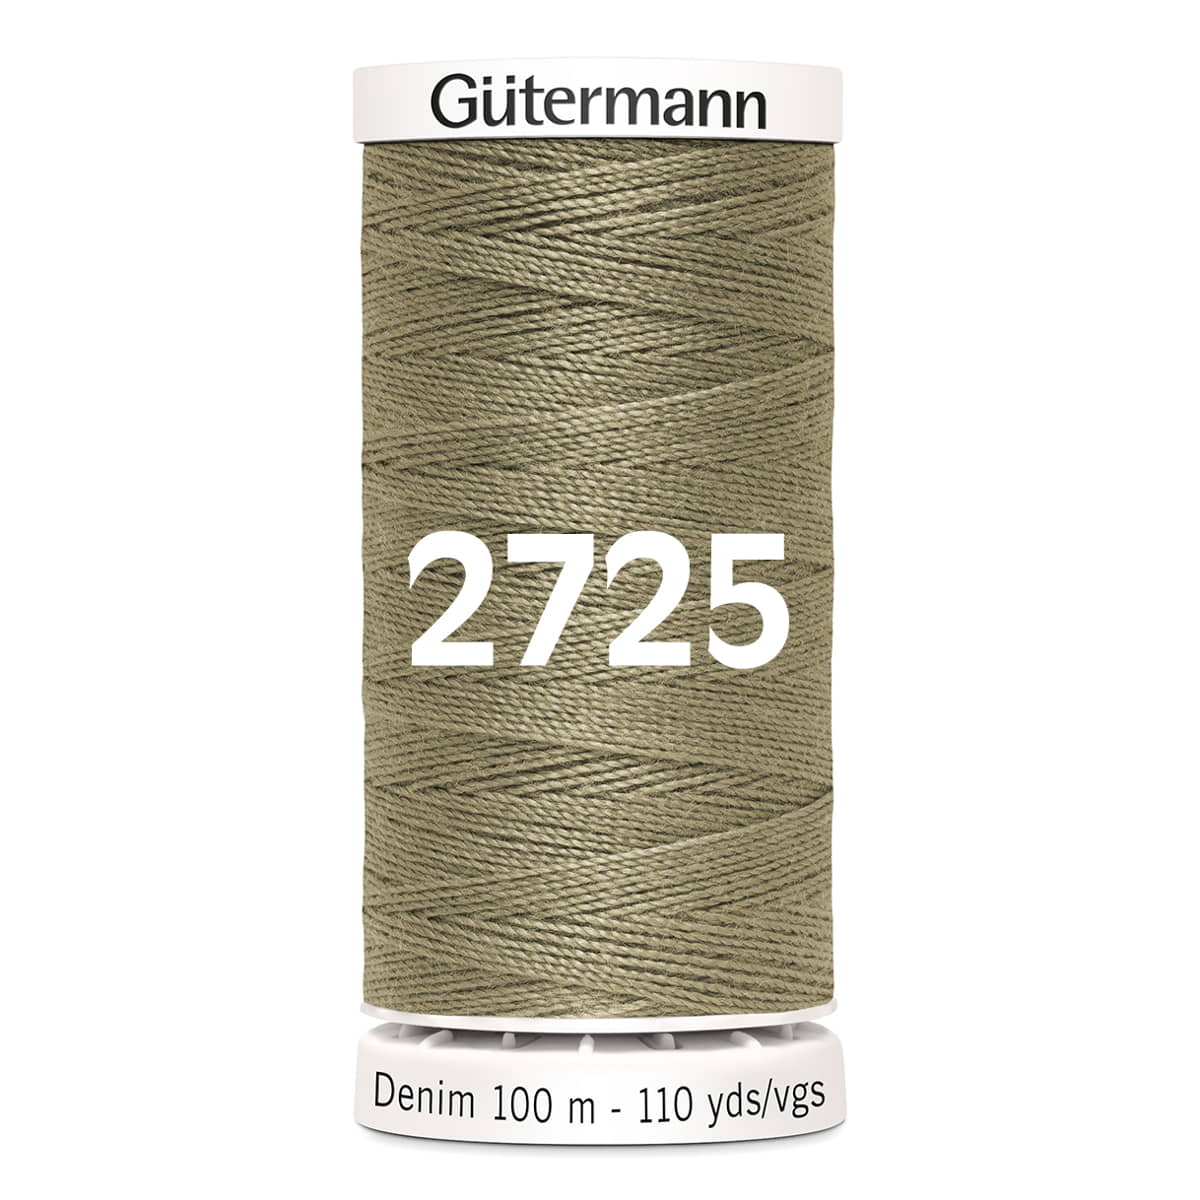 Gutermann jeans - demin naaigaren | 100m | 2725 kaki naaigaren GM-DEMIN-2725 4029394471964